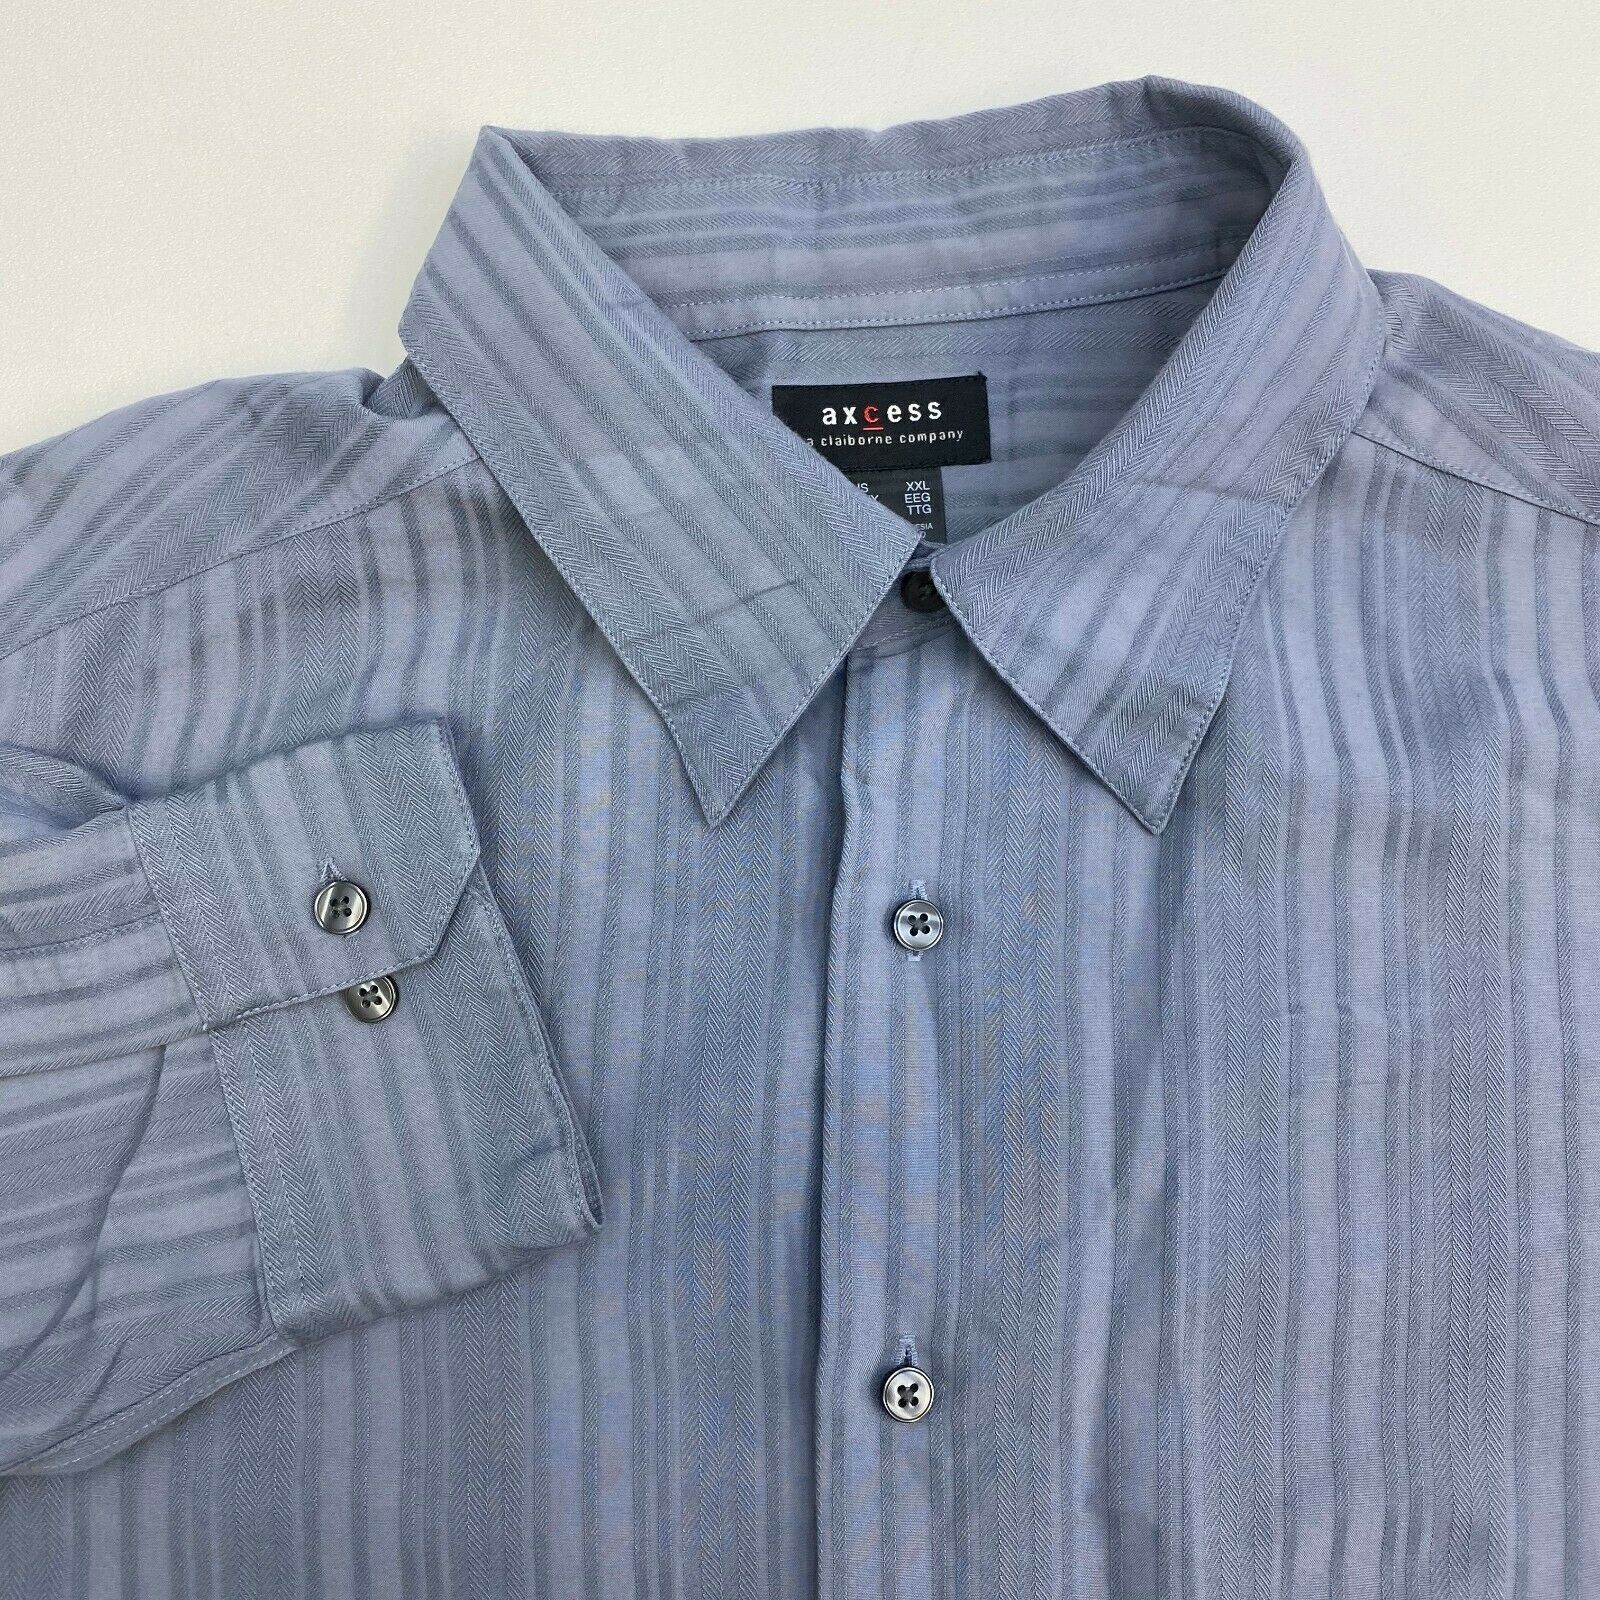 Axcess Button Up Shirt Mens XXL Gray Stripe Long Sleeve Casual - Casual ...